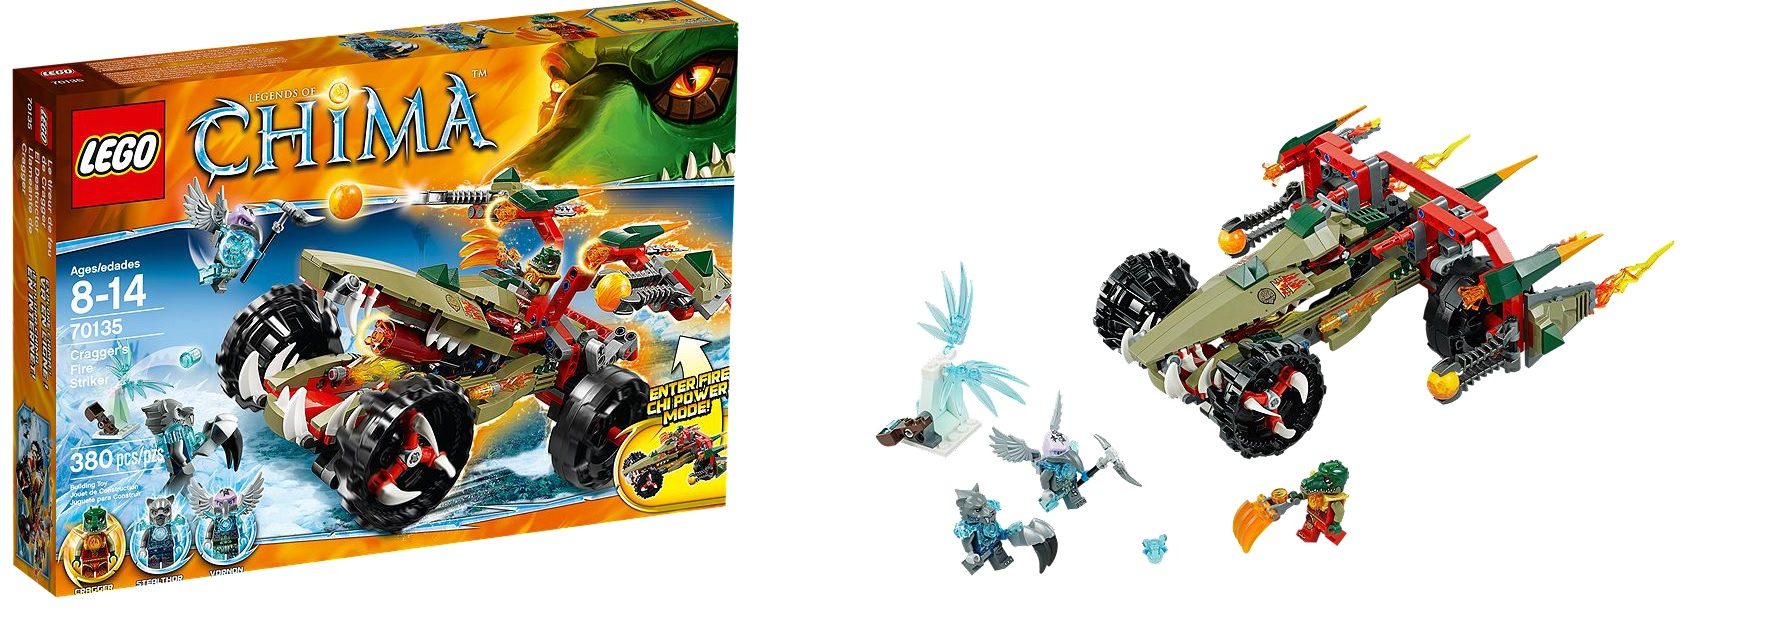 LEGO-Chima-70135-Cragger%E2%80%99s-Fire-Striker-Toysnbricks.jpg